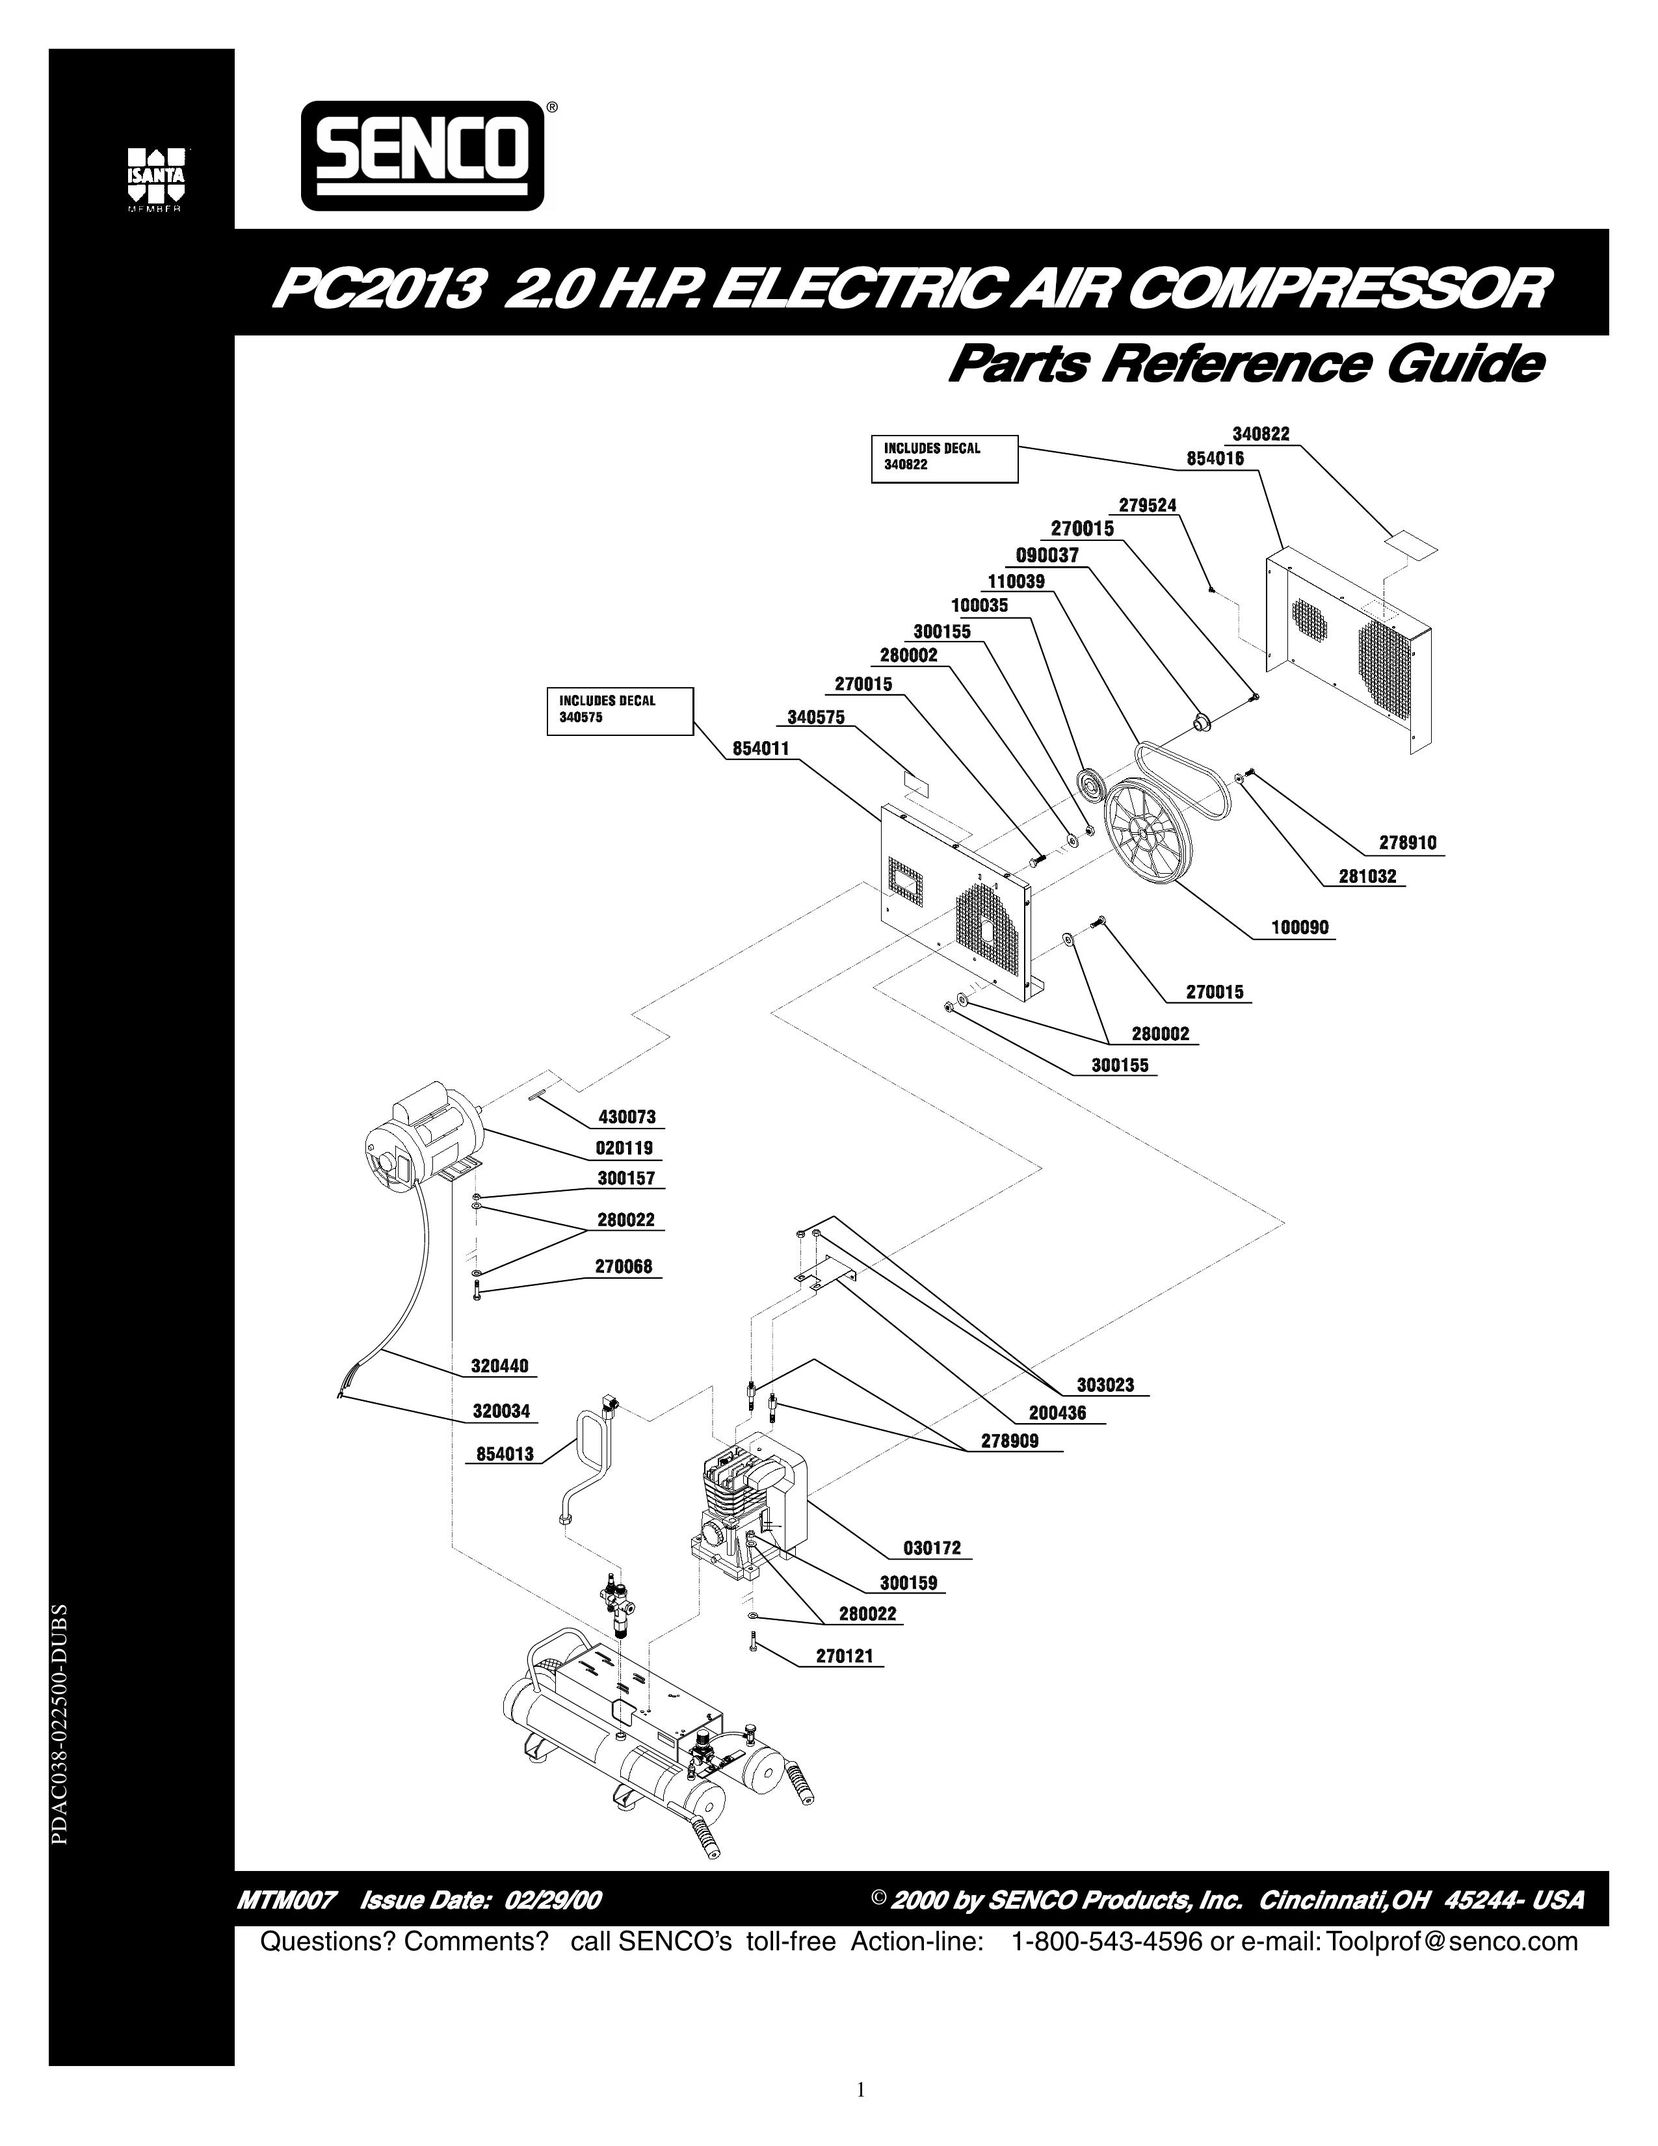 Senco PC2013 Air Compressor User Manual